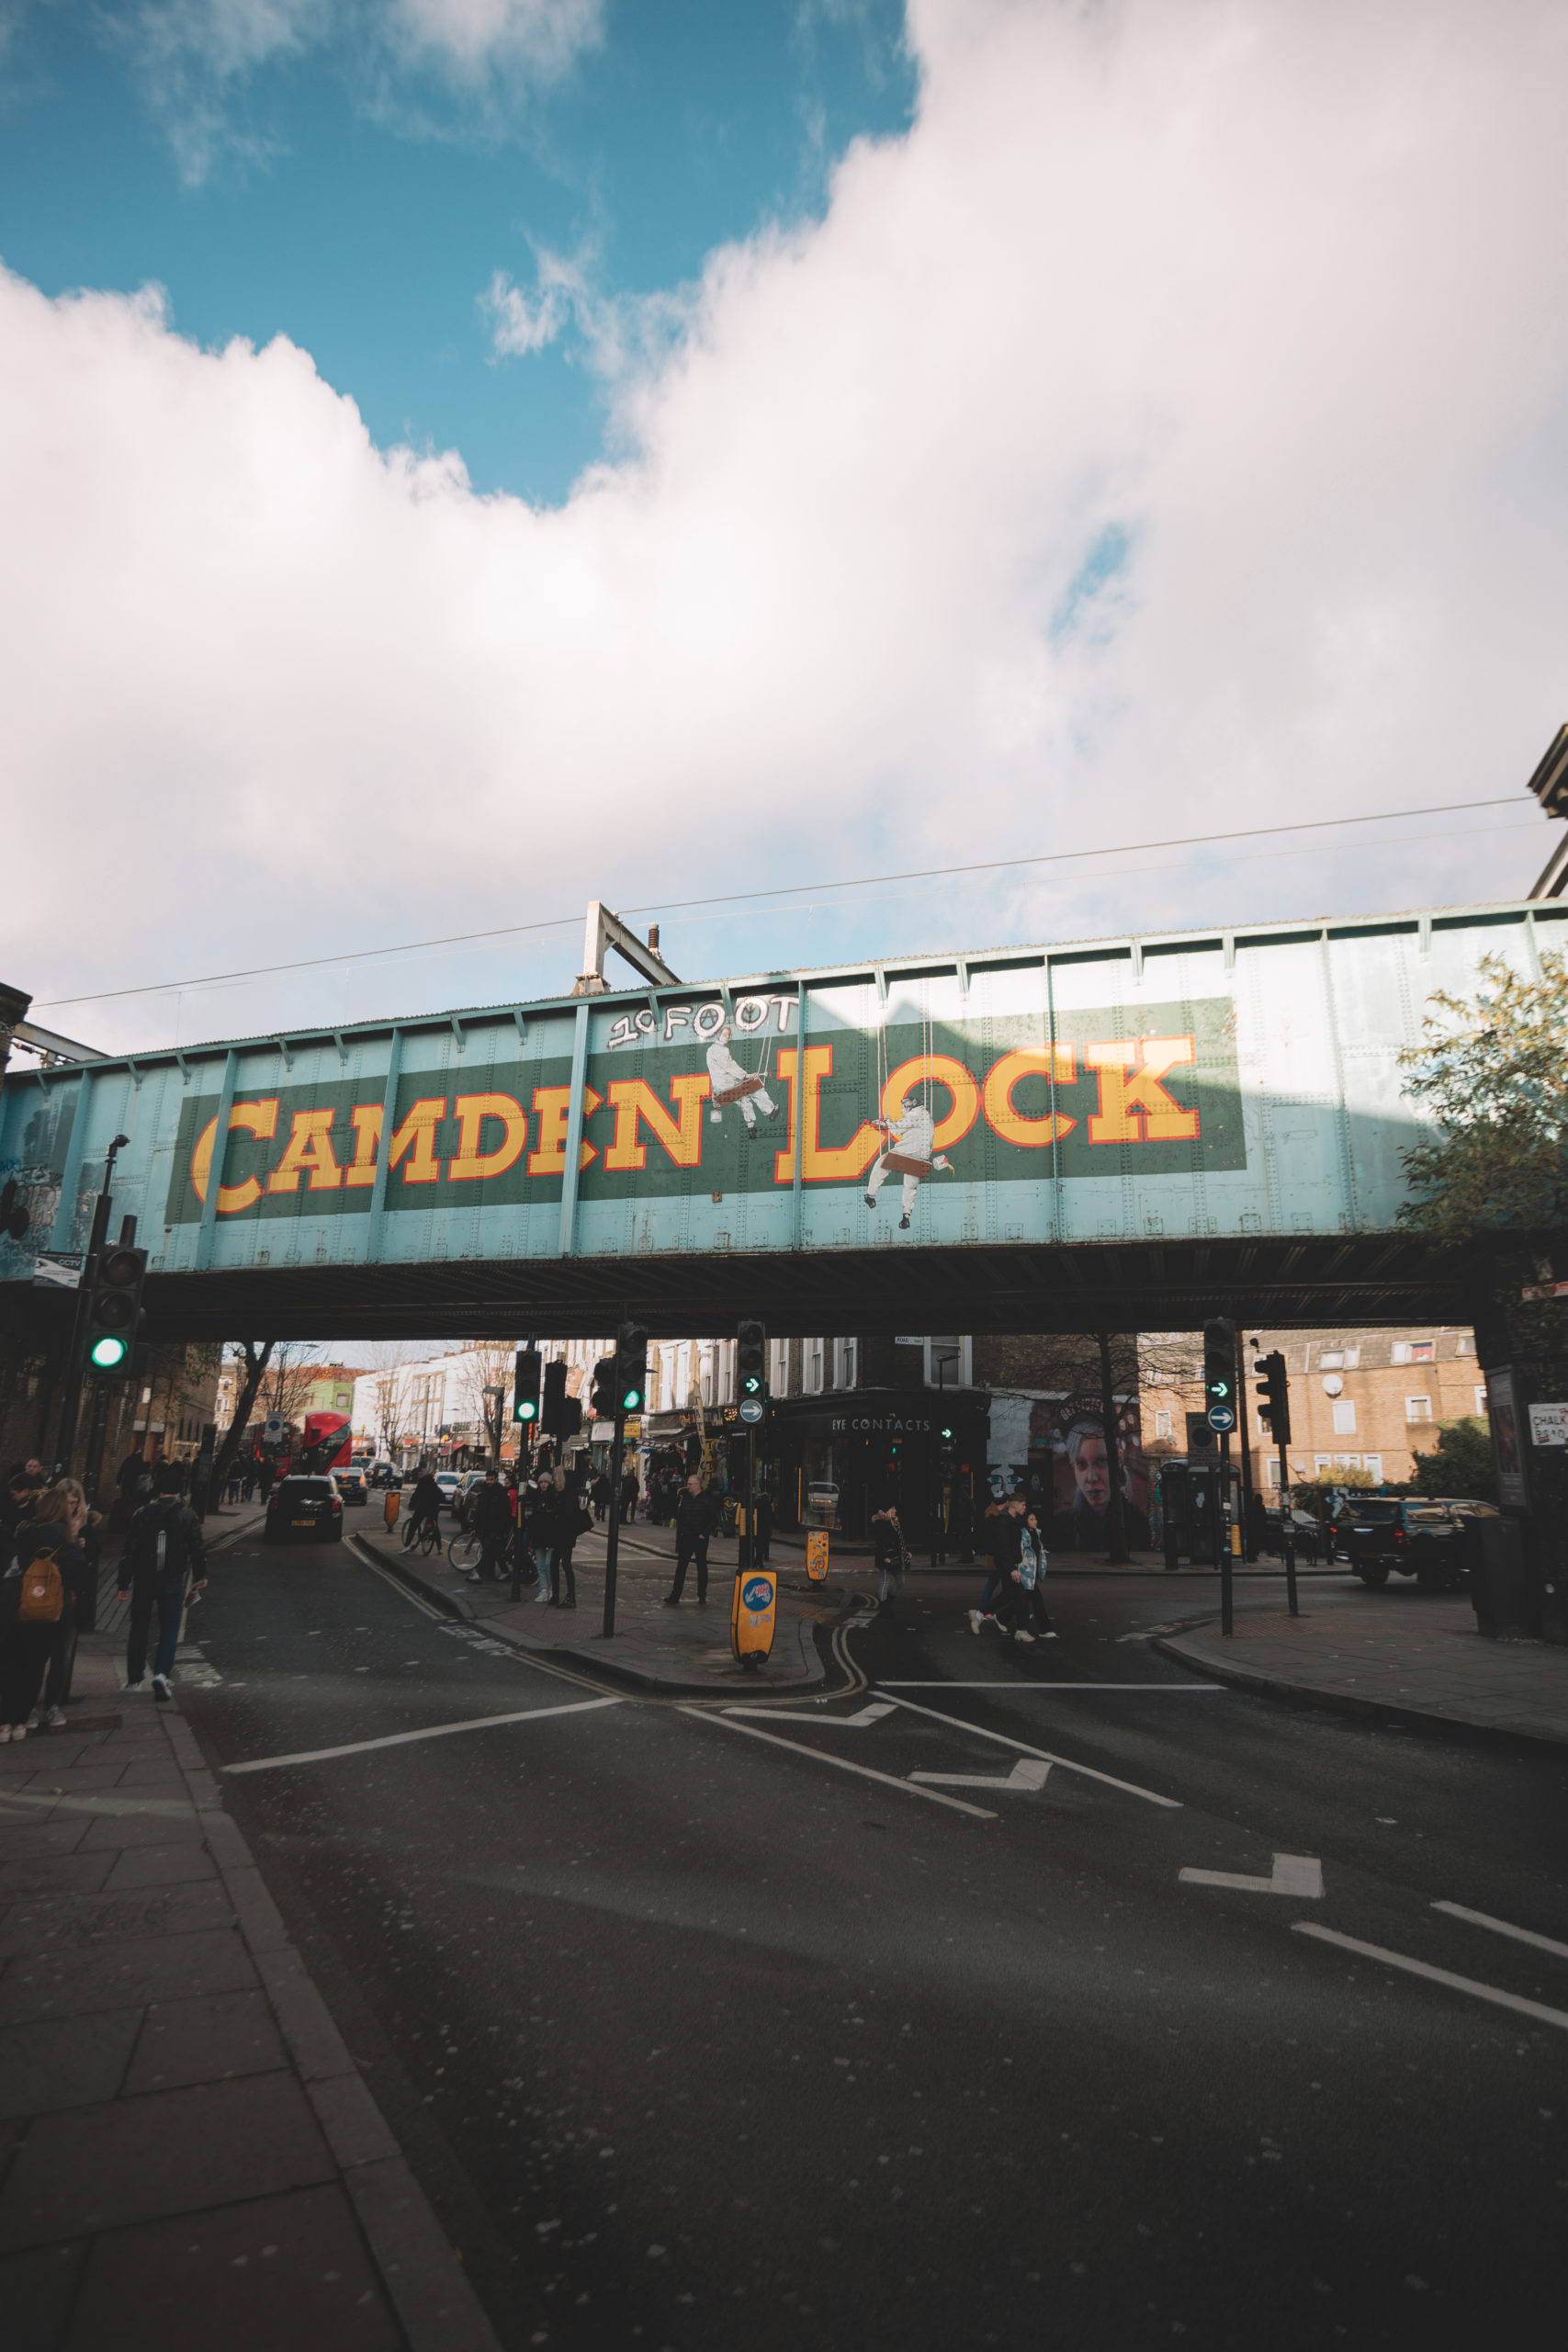 Visiter Londres, Camden